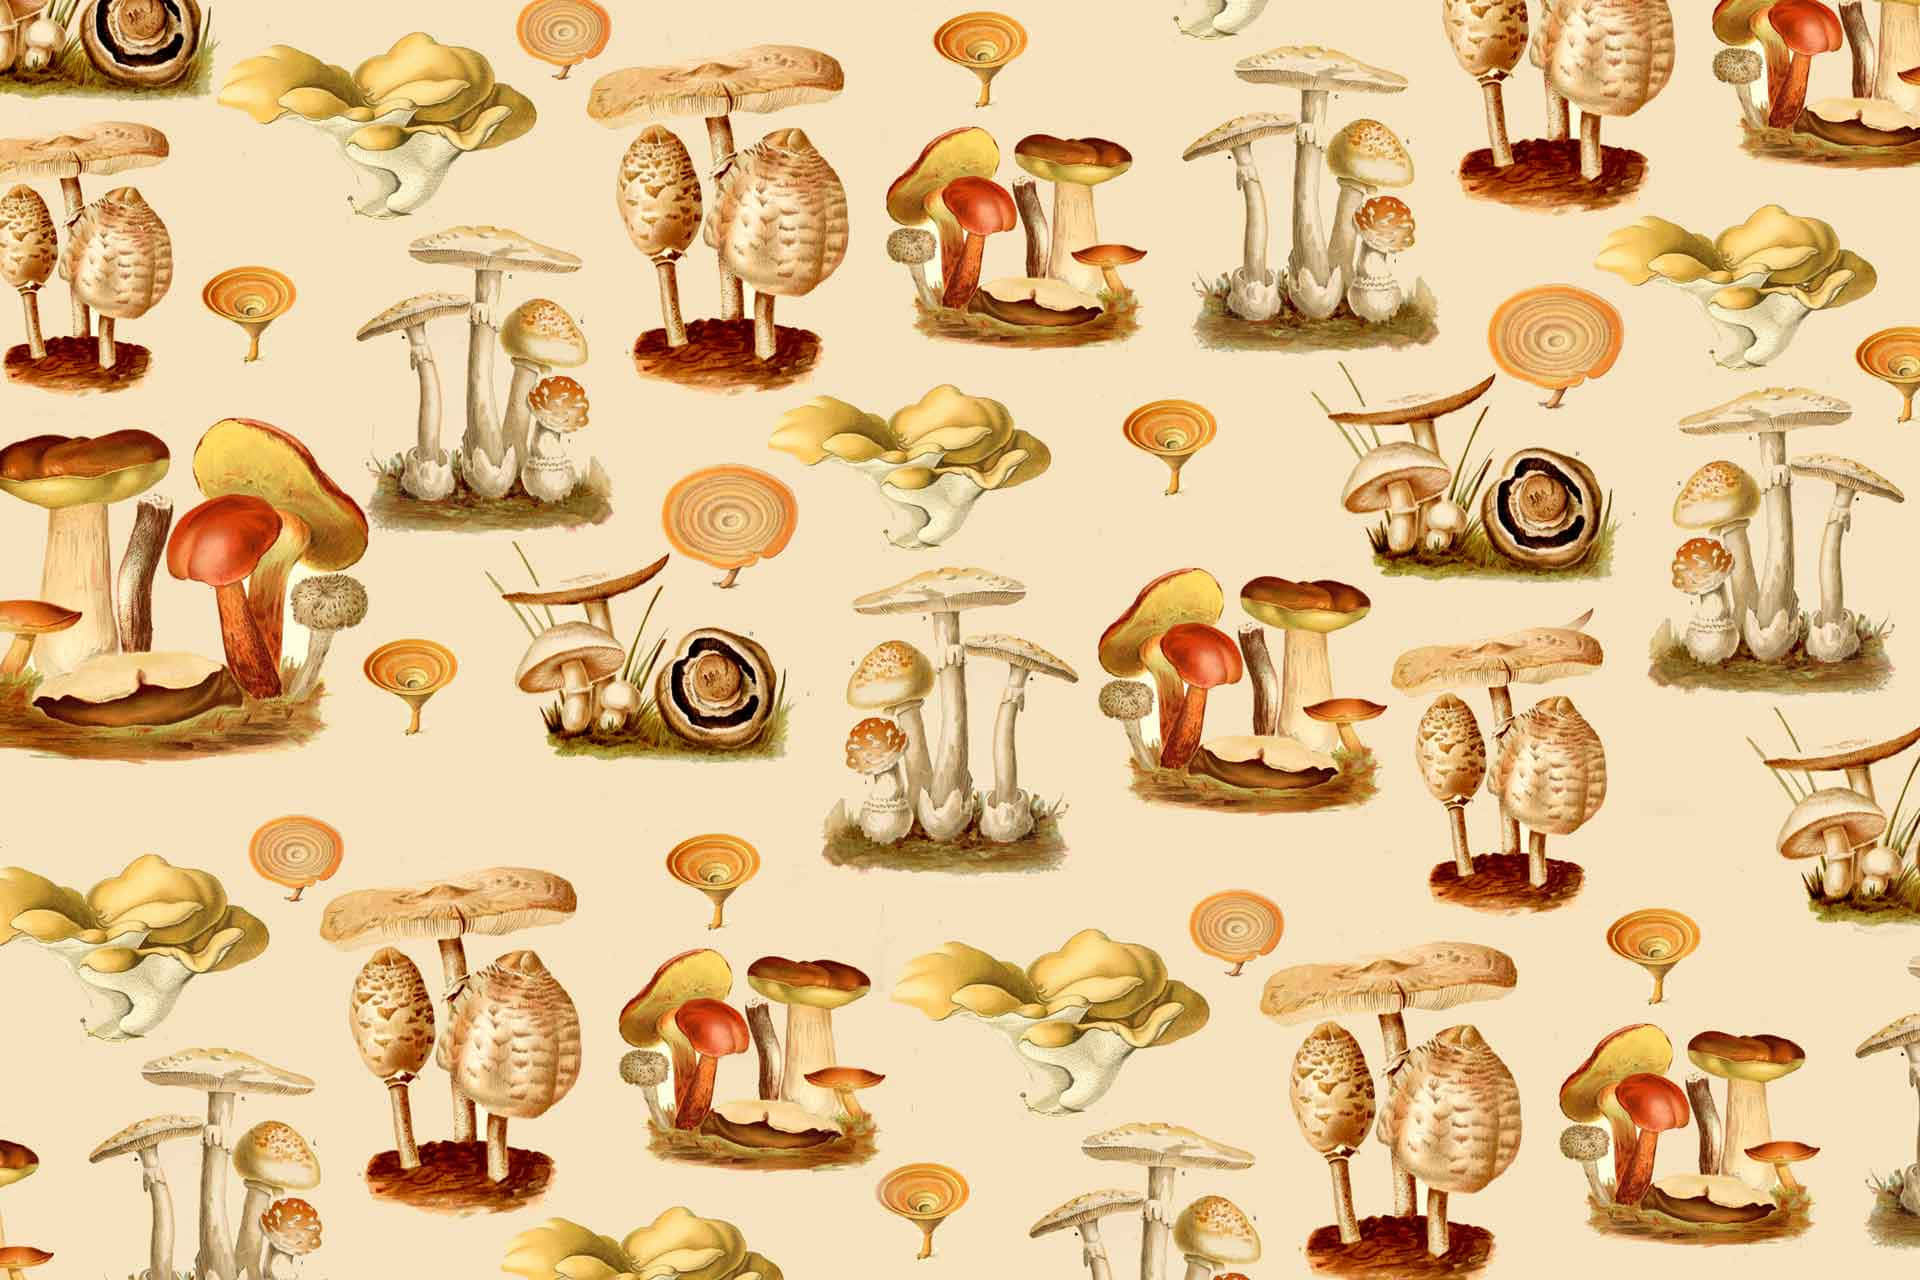 Fungus Vintage Poster Digital Art Picture